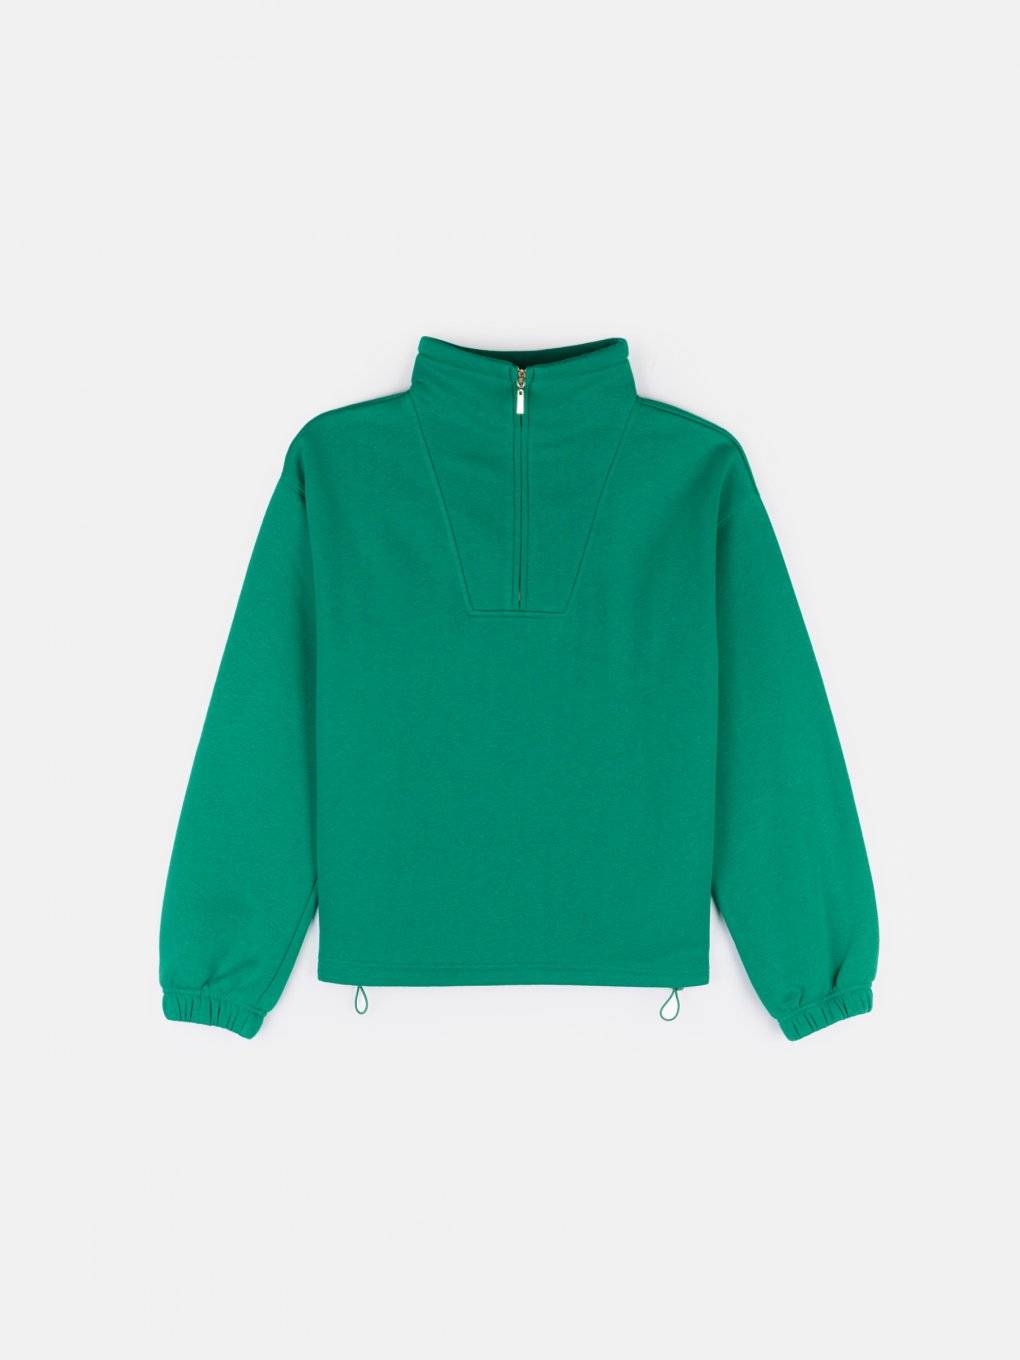 Basic sweatshirt with a zipper